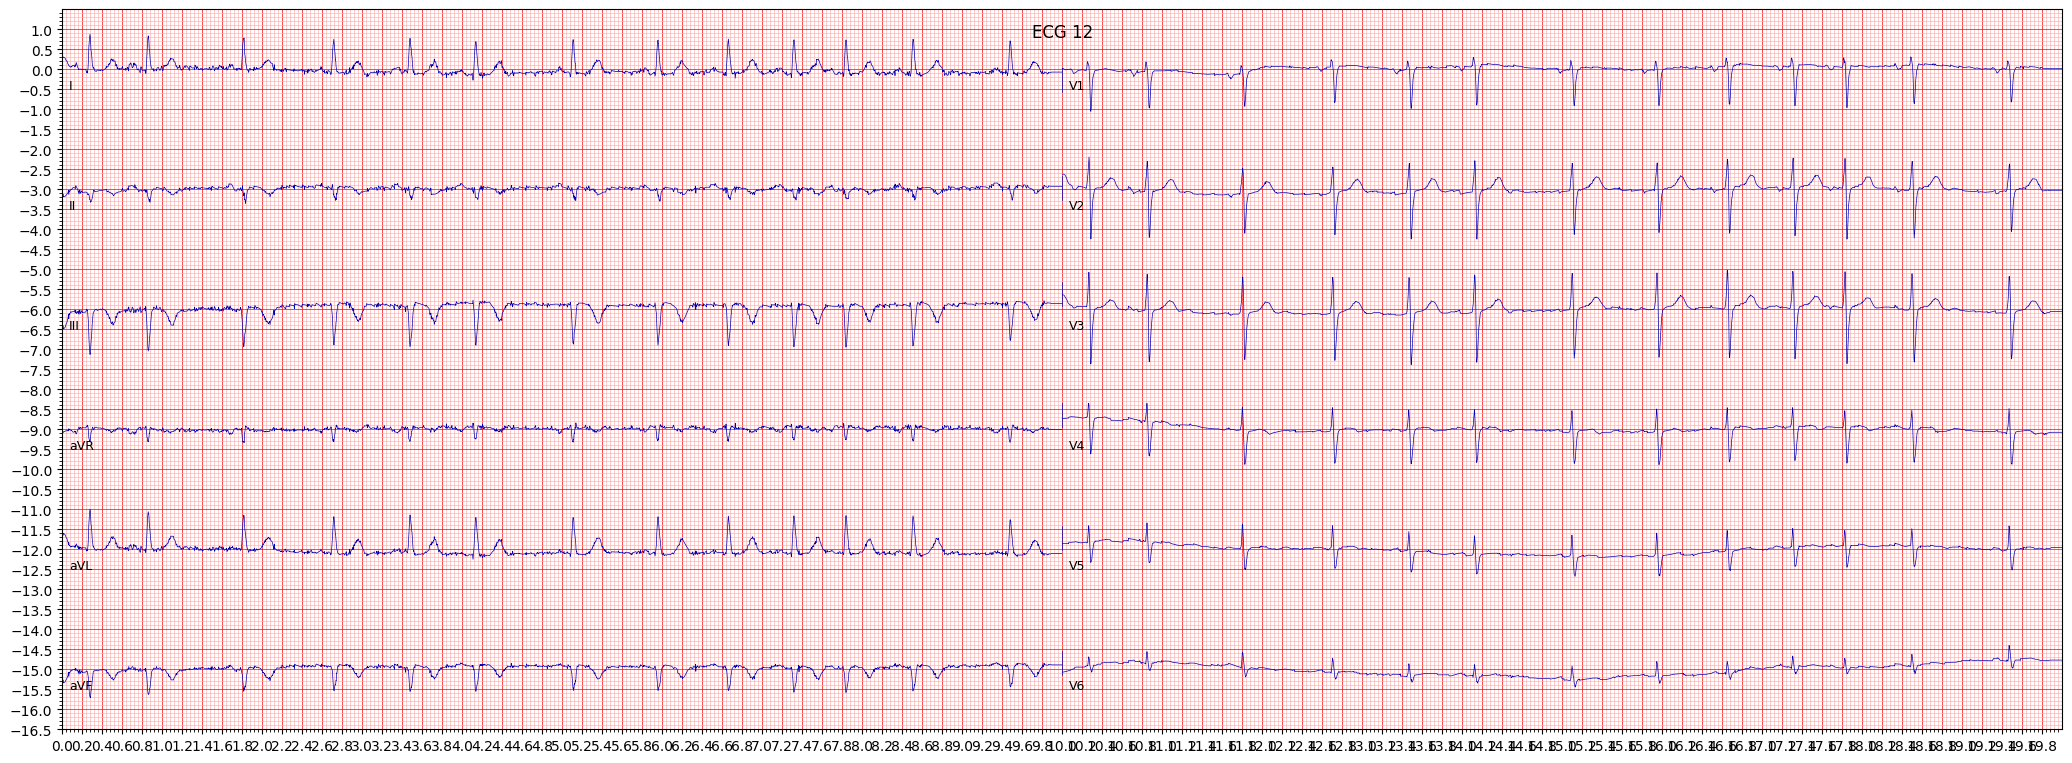 inferolateral myocardial infarction (ILMI) example 6211